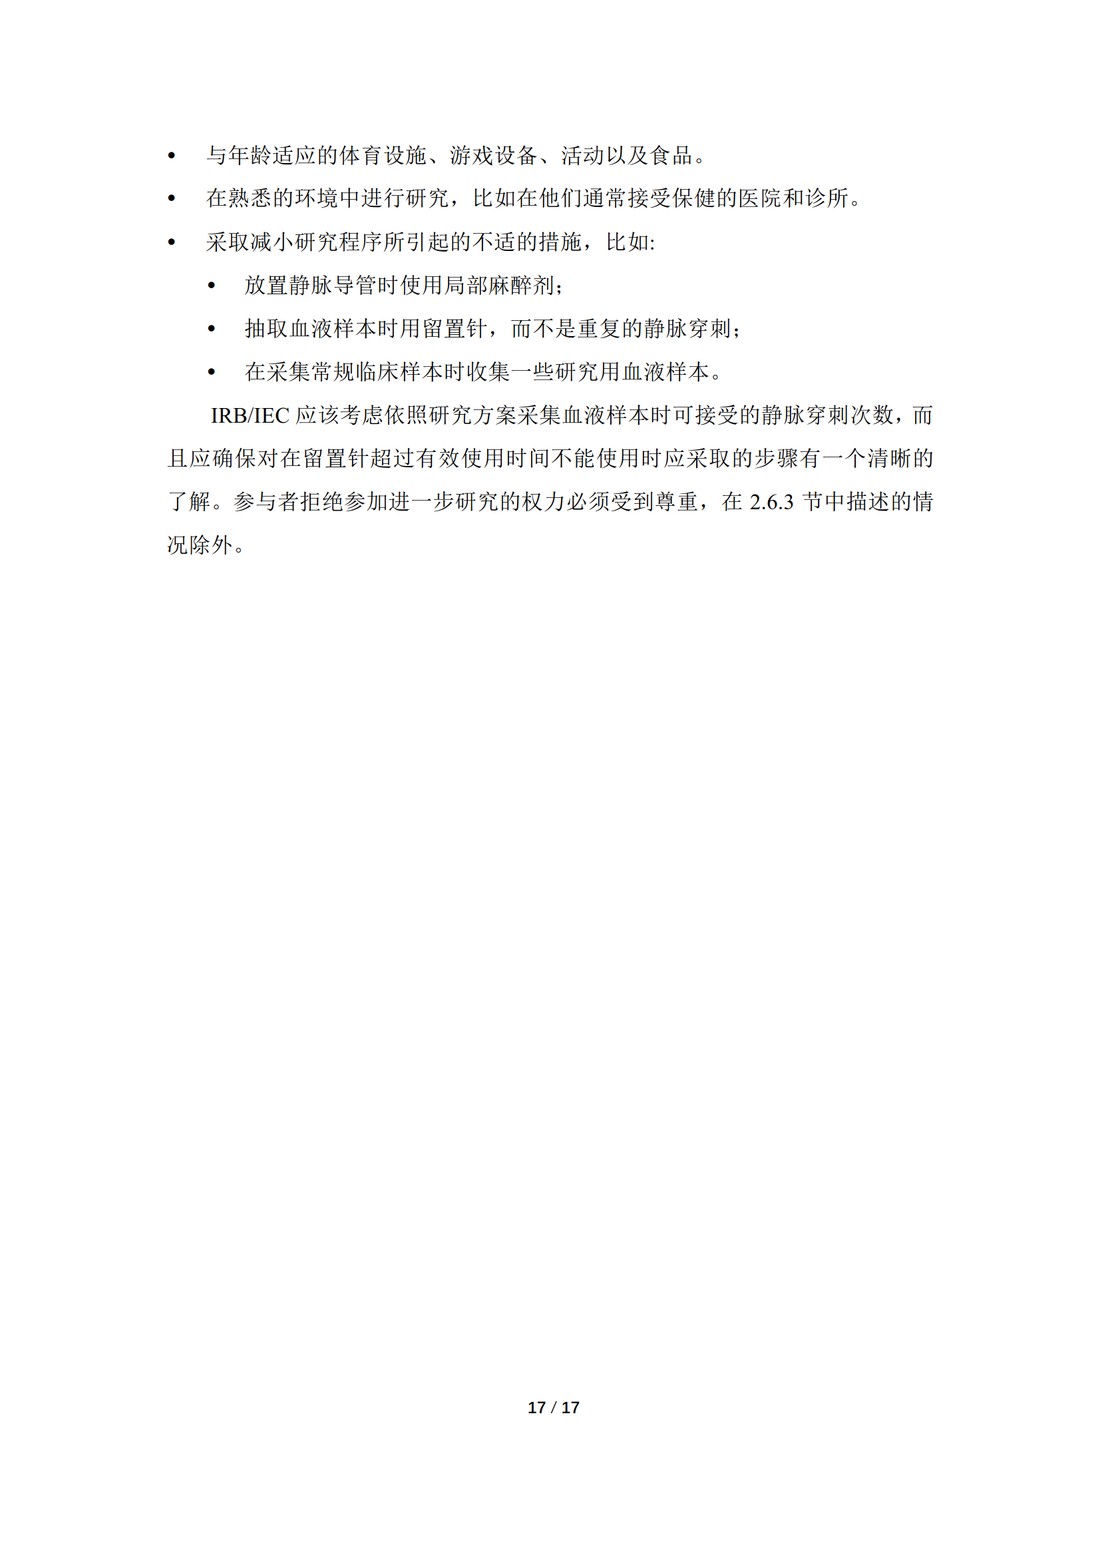 E11：用于儿科人群的医学产品的临床研究（中文翻译公开征求意见稿）_17.jpg